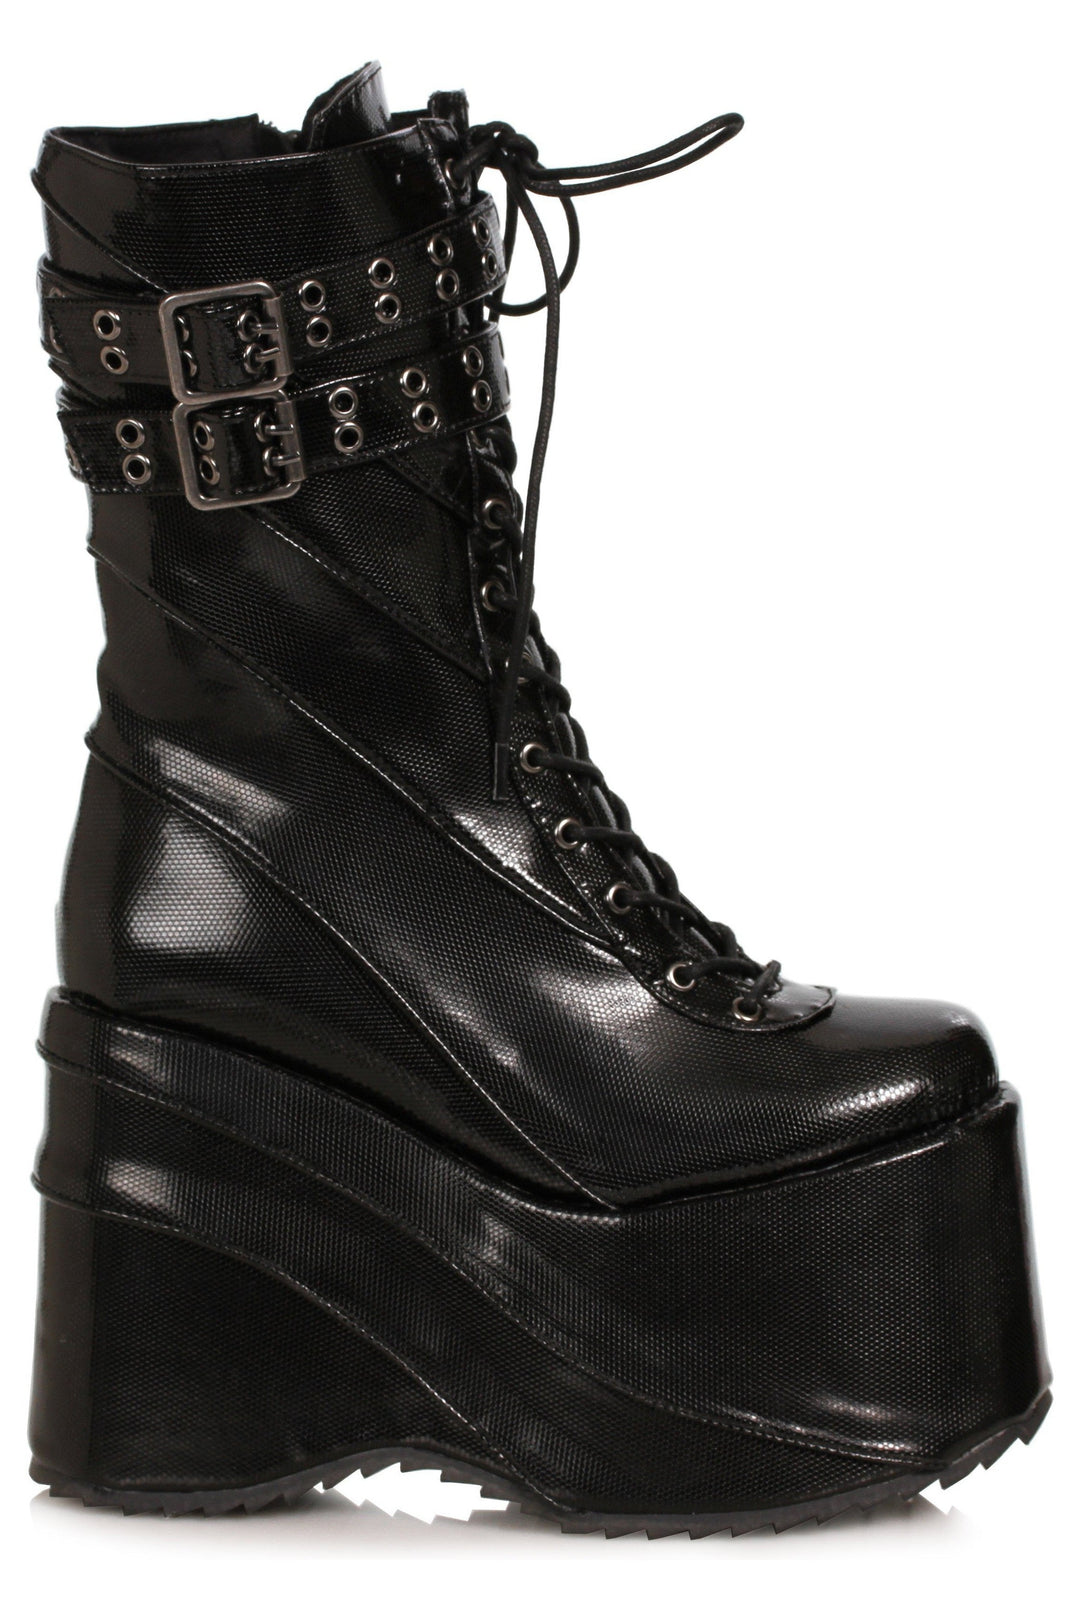 Ellie Shoes 500-SHARLA Chunky Heel Platform Boot